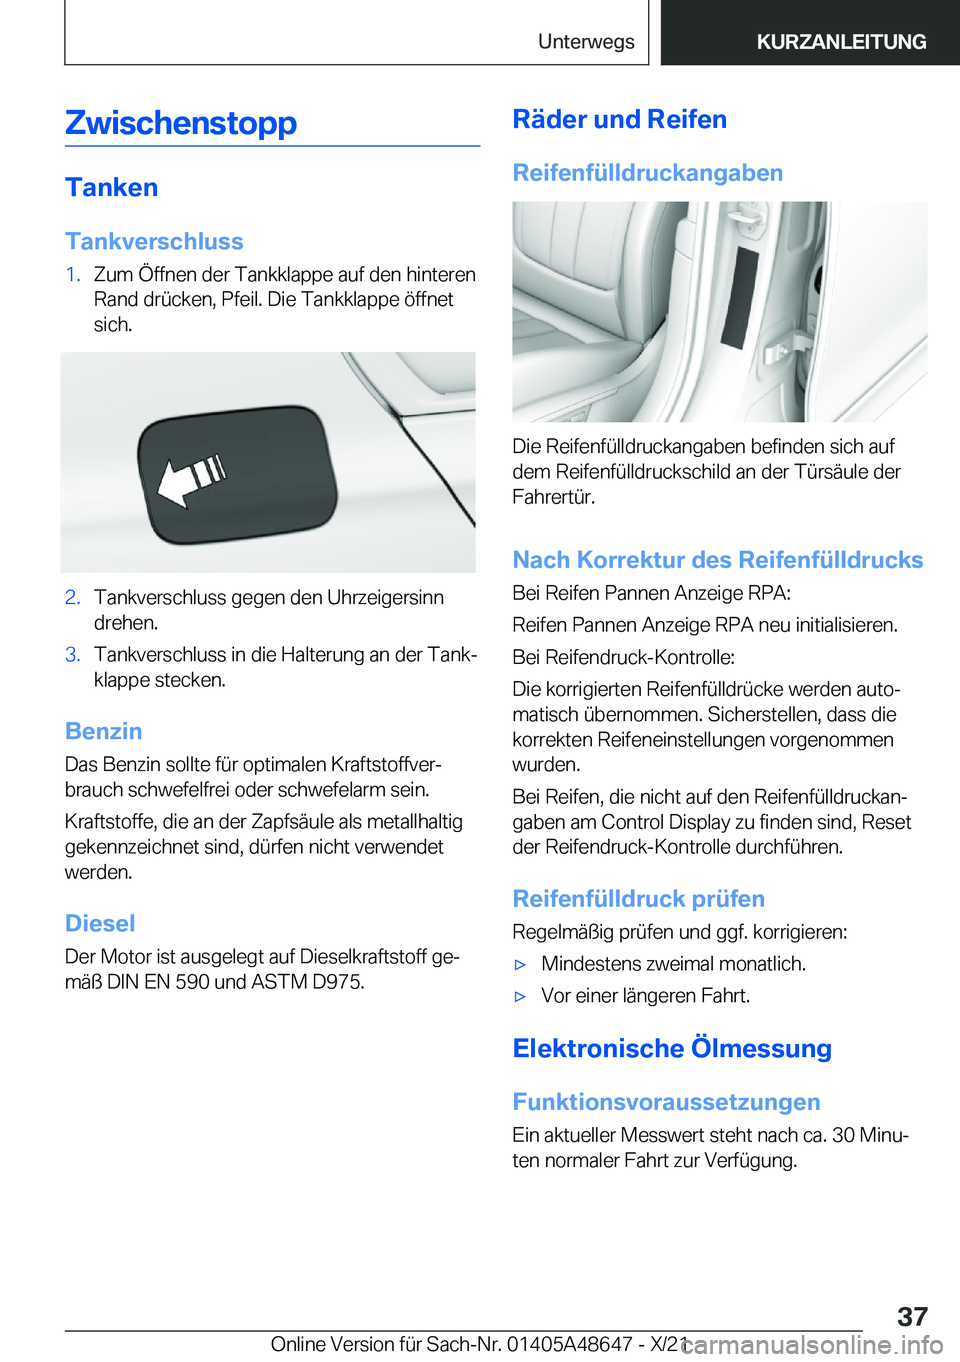 BMW 3 SERIES 2022  Betriebsanleitungen (in German) �Z�w�i�s�c�h�e�n�s�t�o�p�p
�T�a�n�k�e�n�T�a�n�k�v�e�r�s�c�h�l�u�s�s
�1�.�Z�u�m��